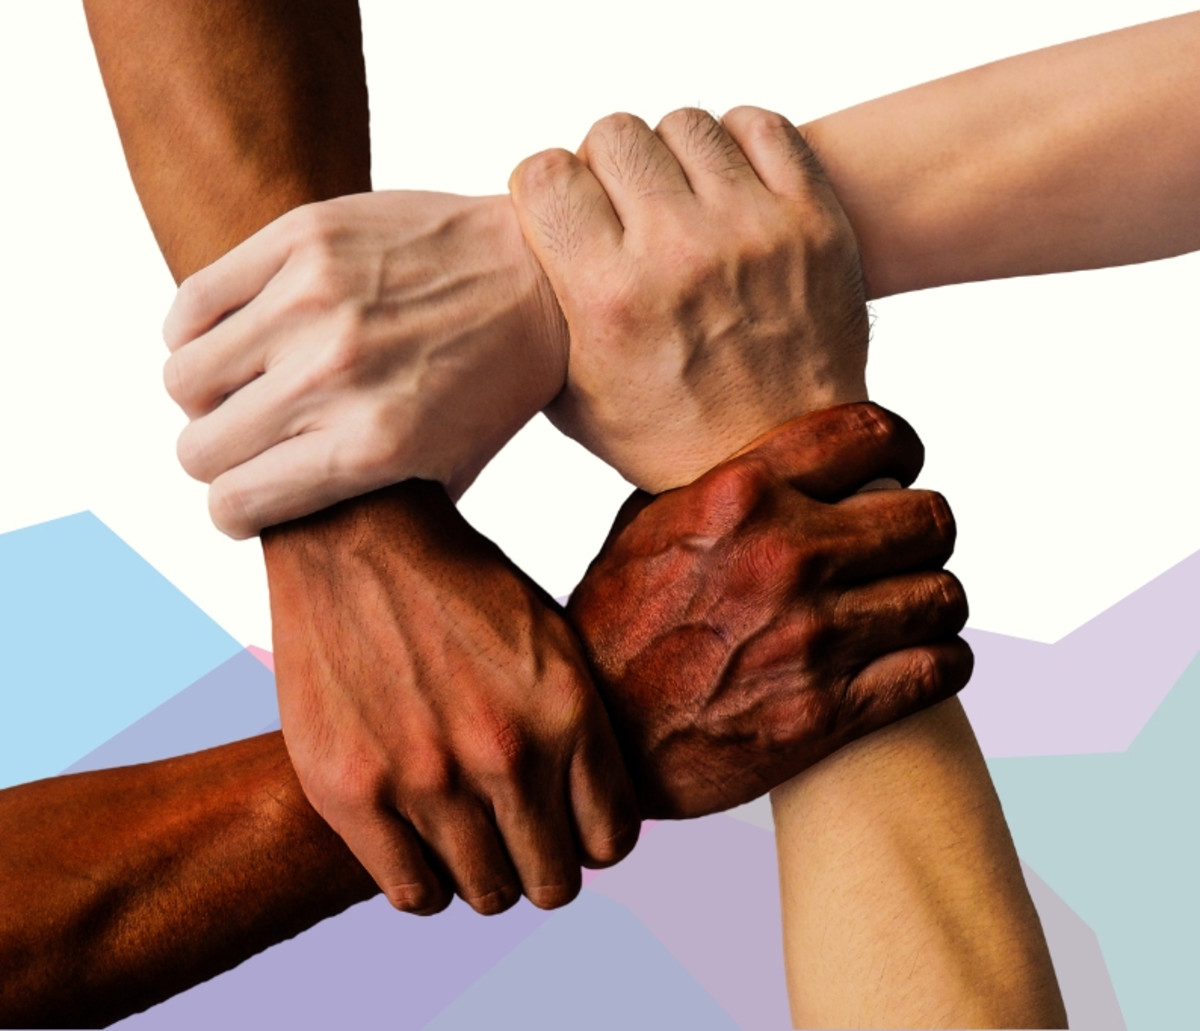 essay-on-unity-in-diversity